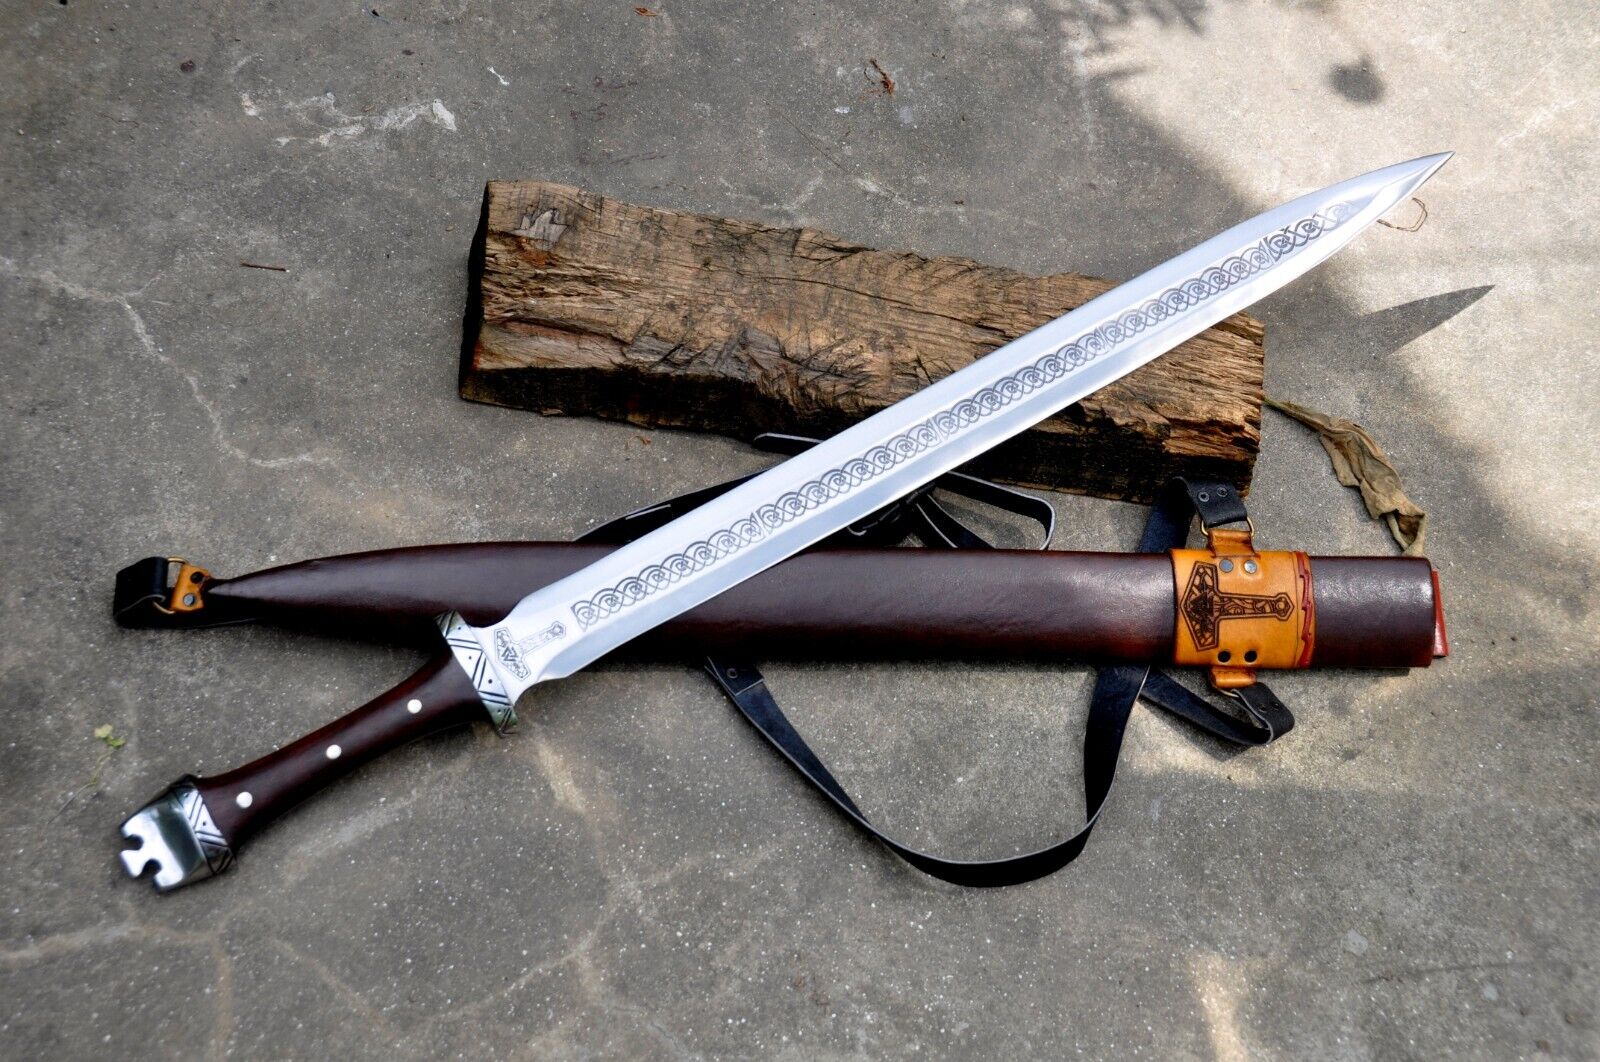 Norseman Viking Sword-24 inches Handmade sword-Hunting, Tactical,Combat sword